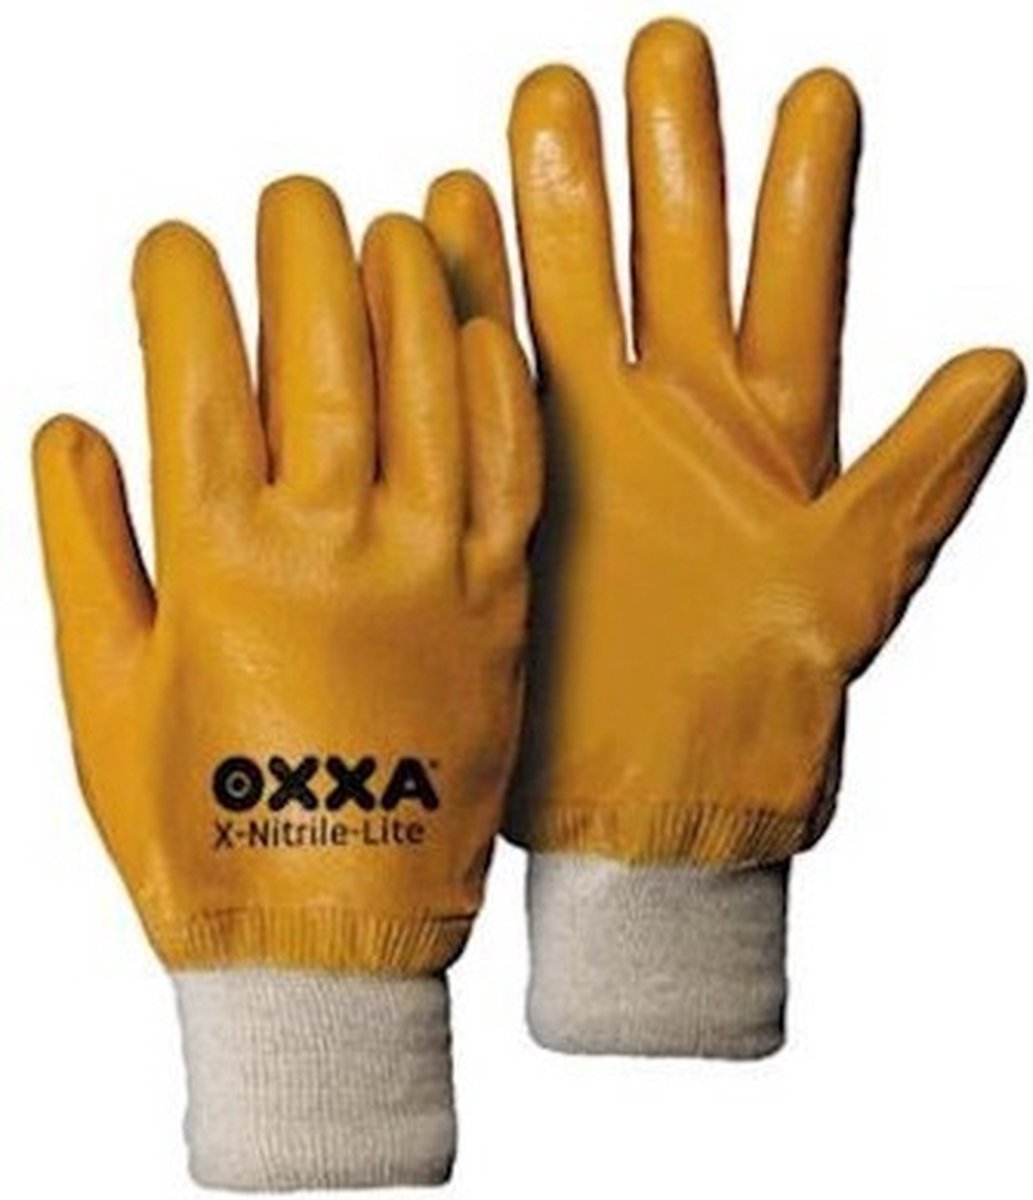 OXXA X-Nitrile-Lite 51-172 handschoen, 12 paar S